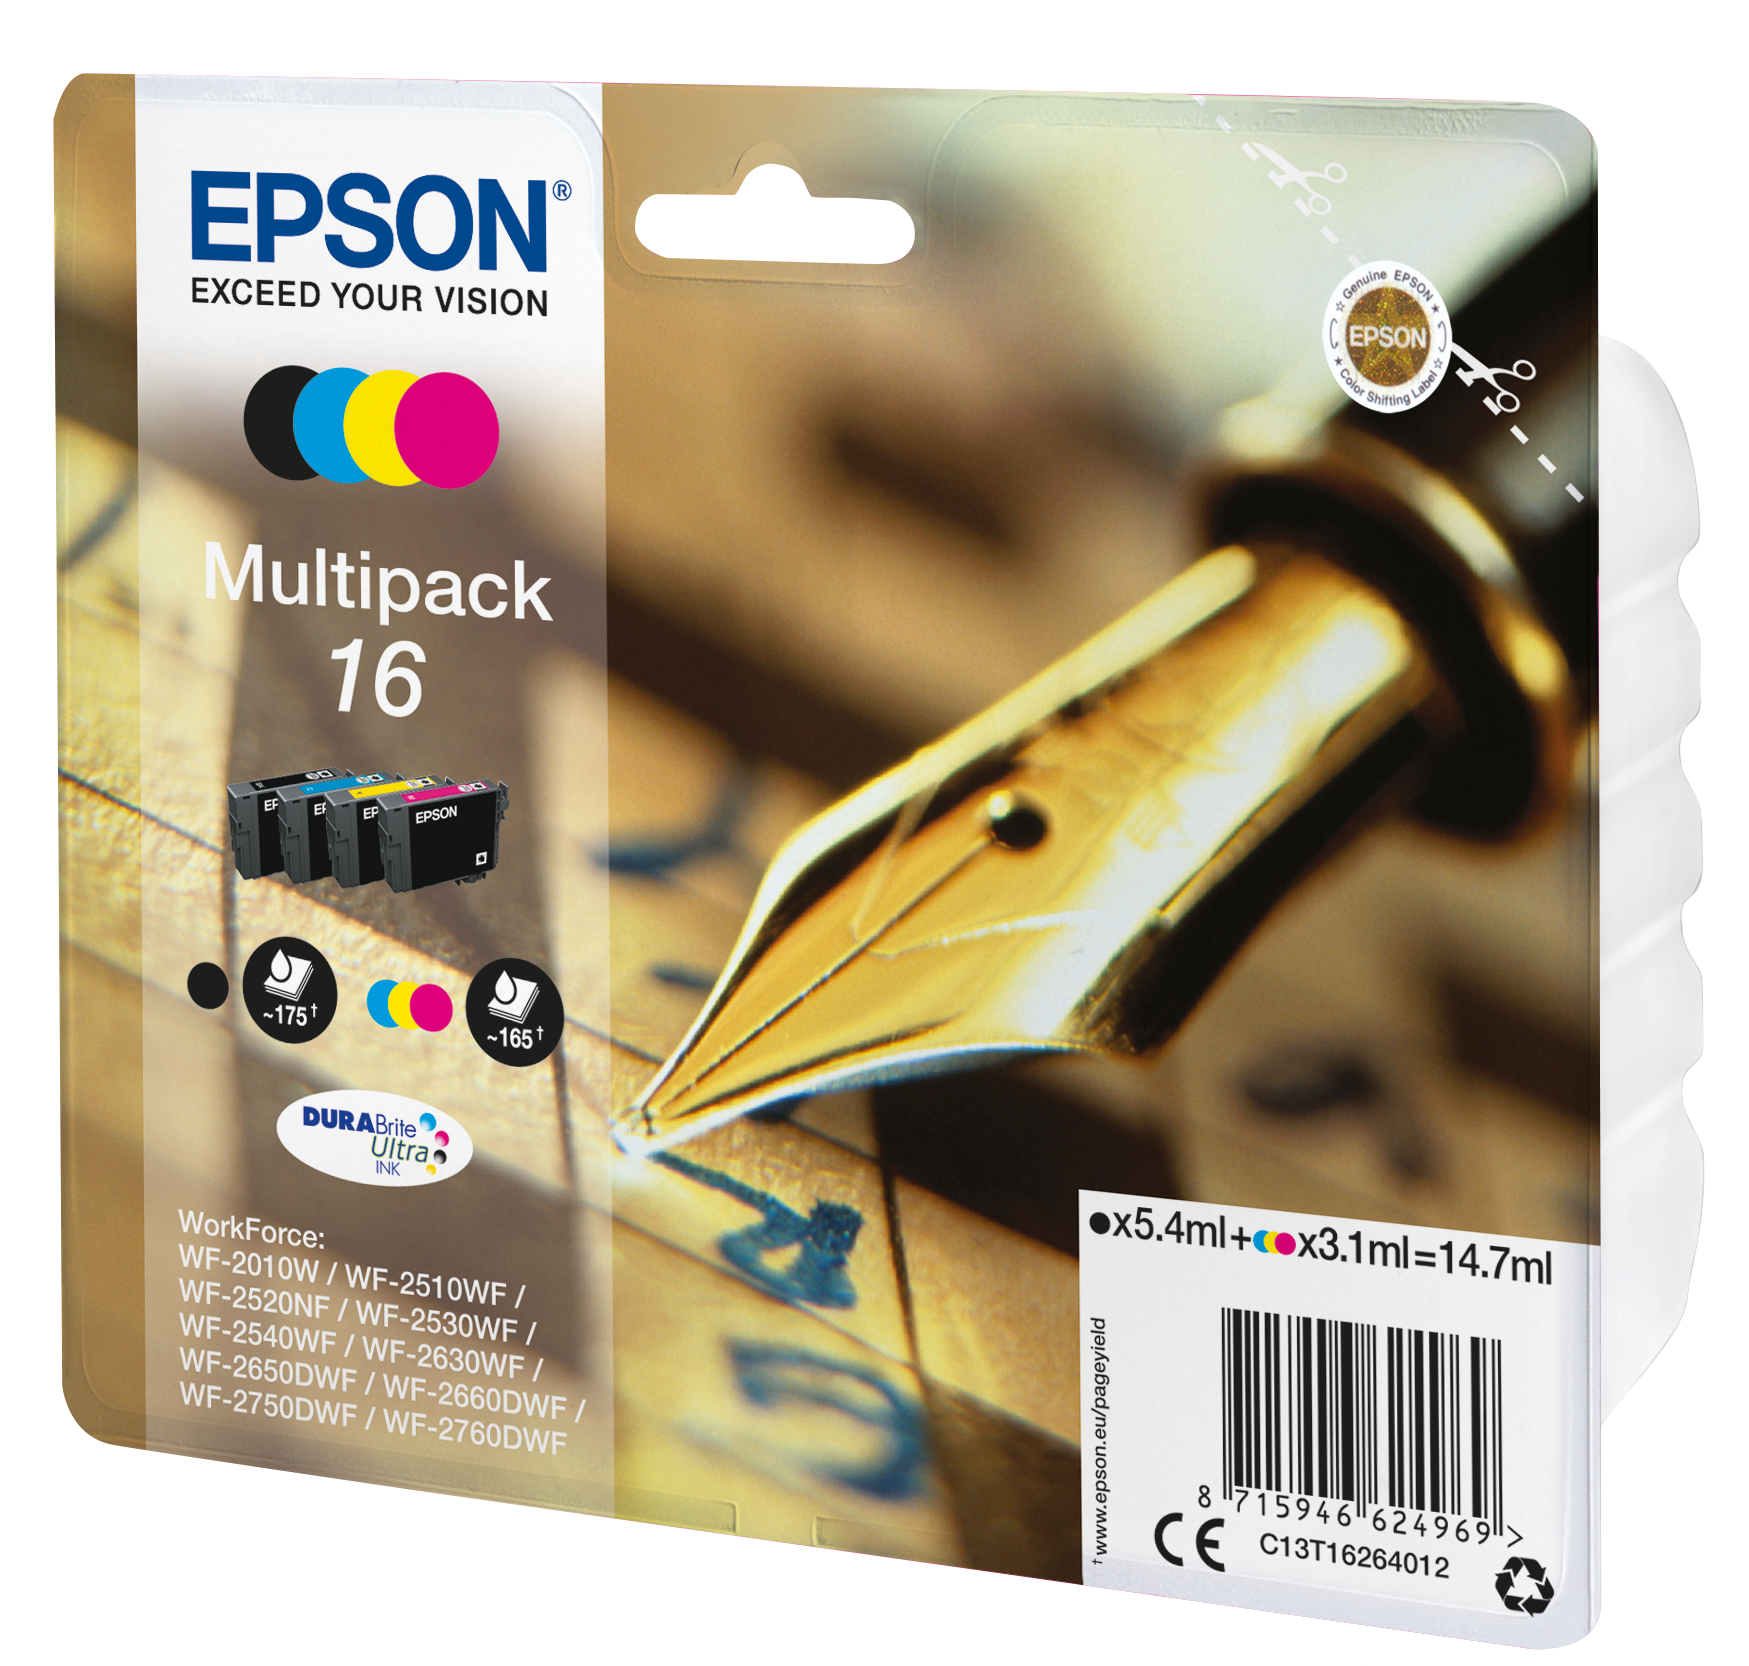 Epson C13T16264012/16 Ink cartridge multi pack Bk,C,M,Y 175pg + 3x165pg, 1x5.4ml + 3x3.1ml Pack=4 for Epson WF 2010/2660/2750